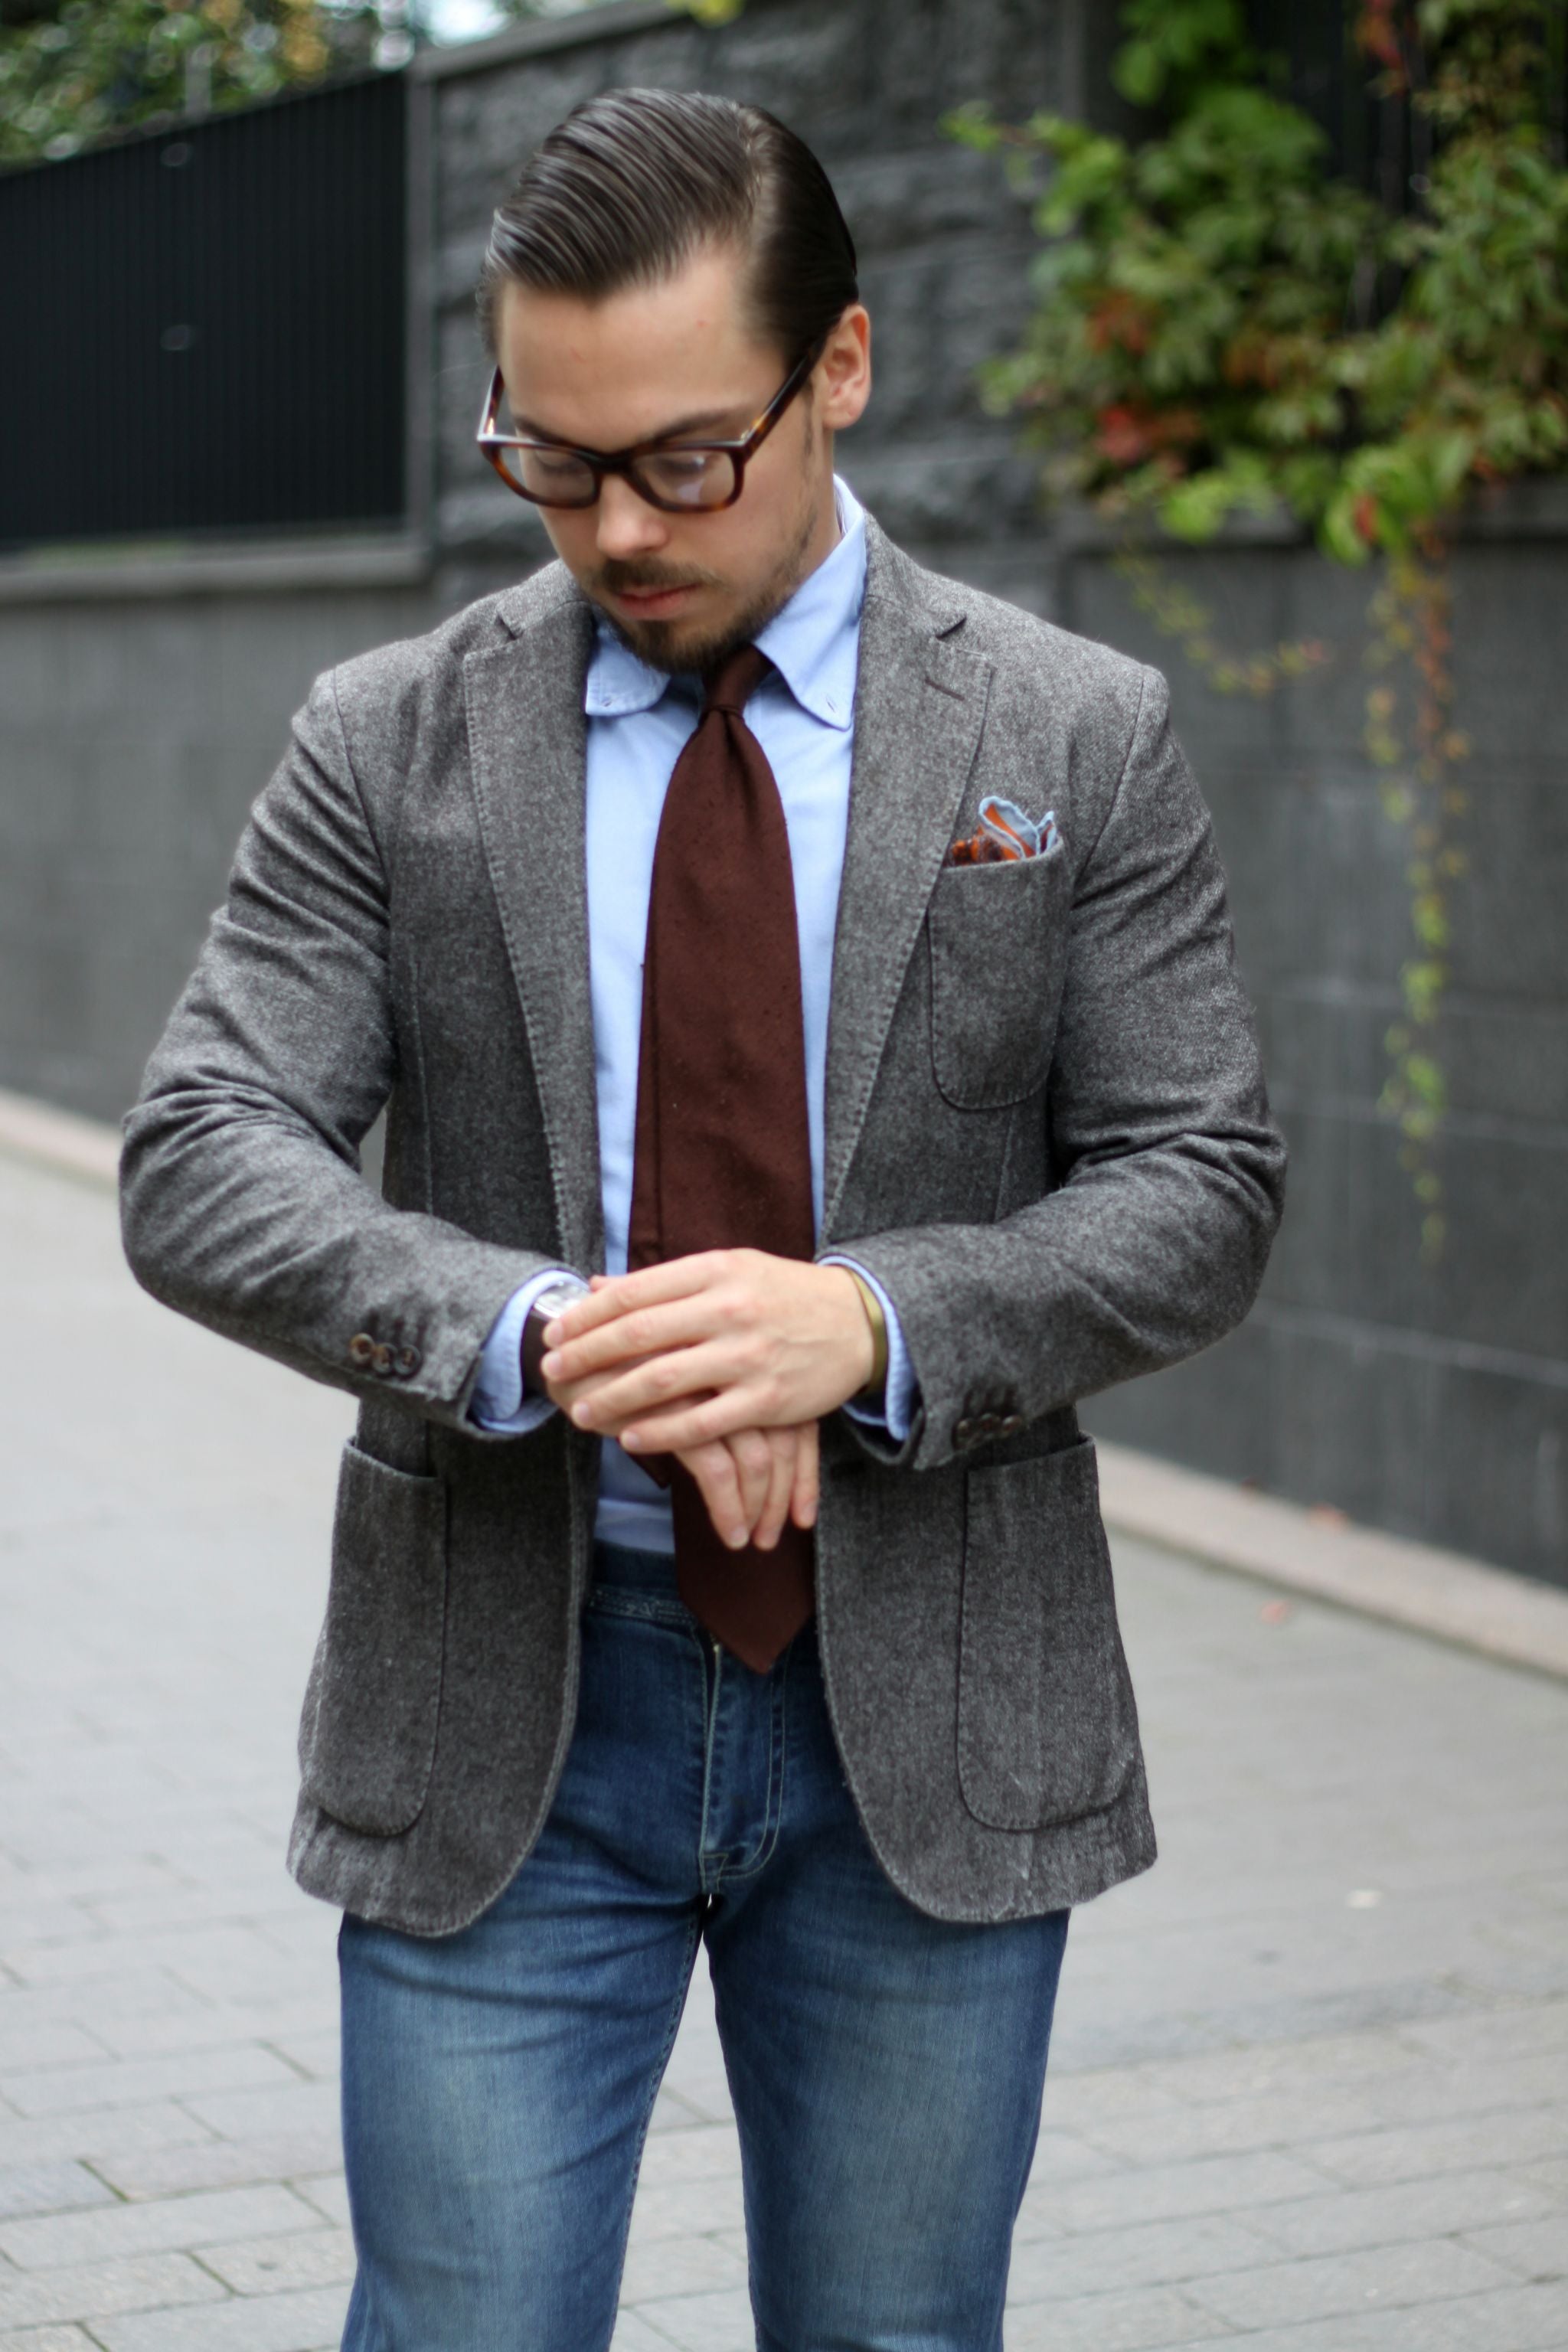 Tie with jeans - Brown shantung silk with denim - DressLikeA.com ...